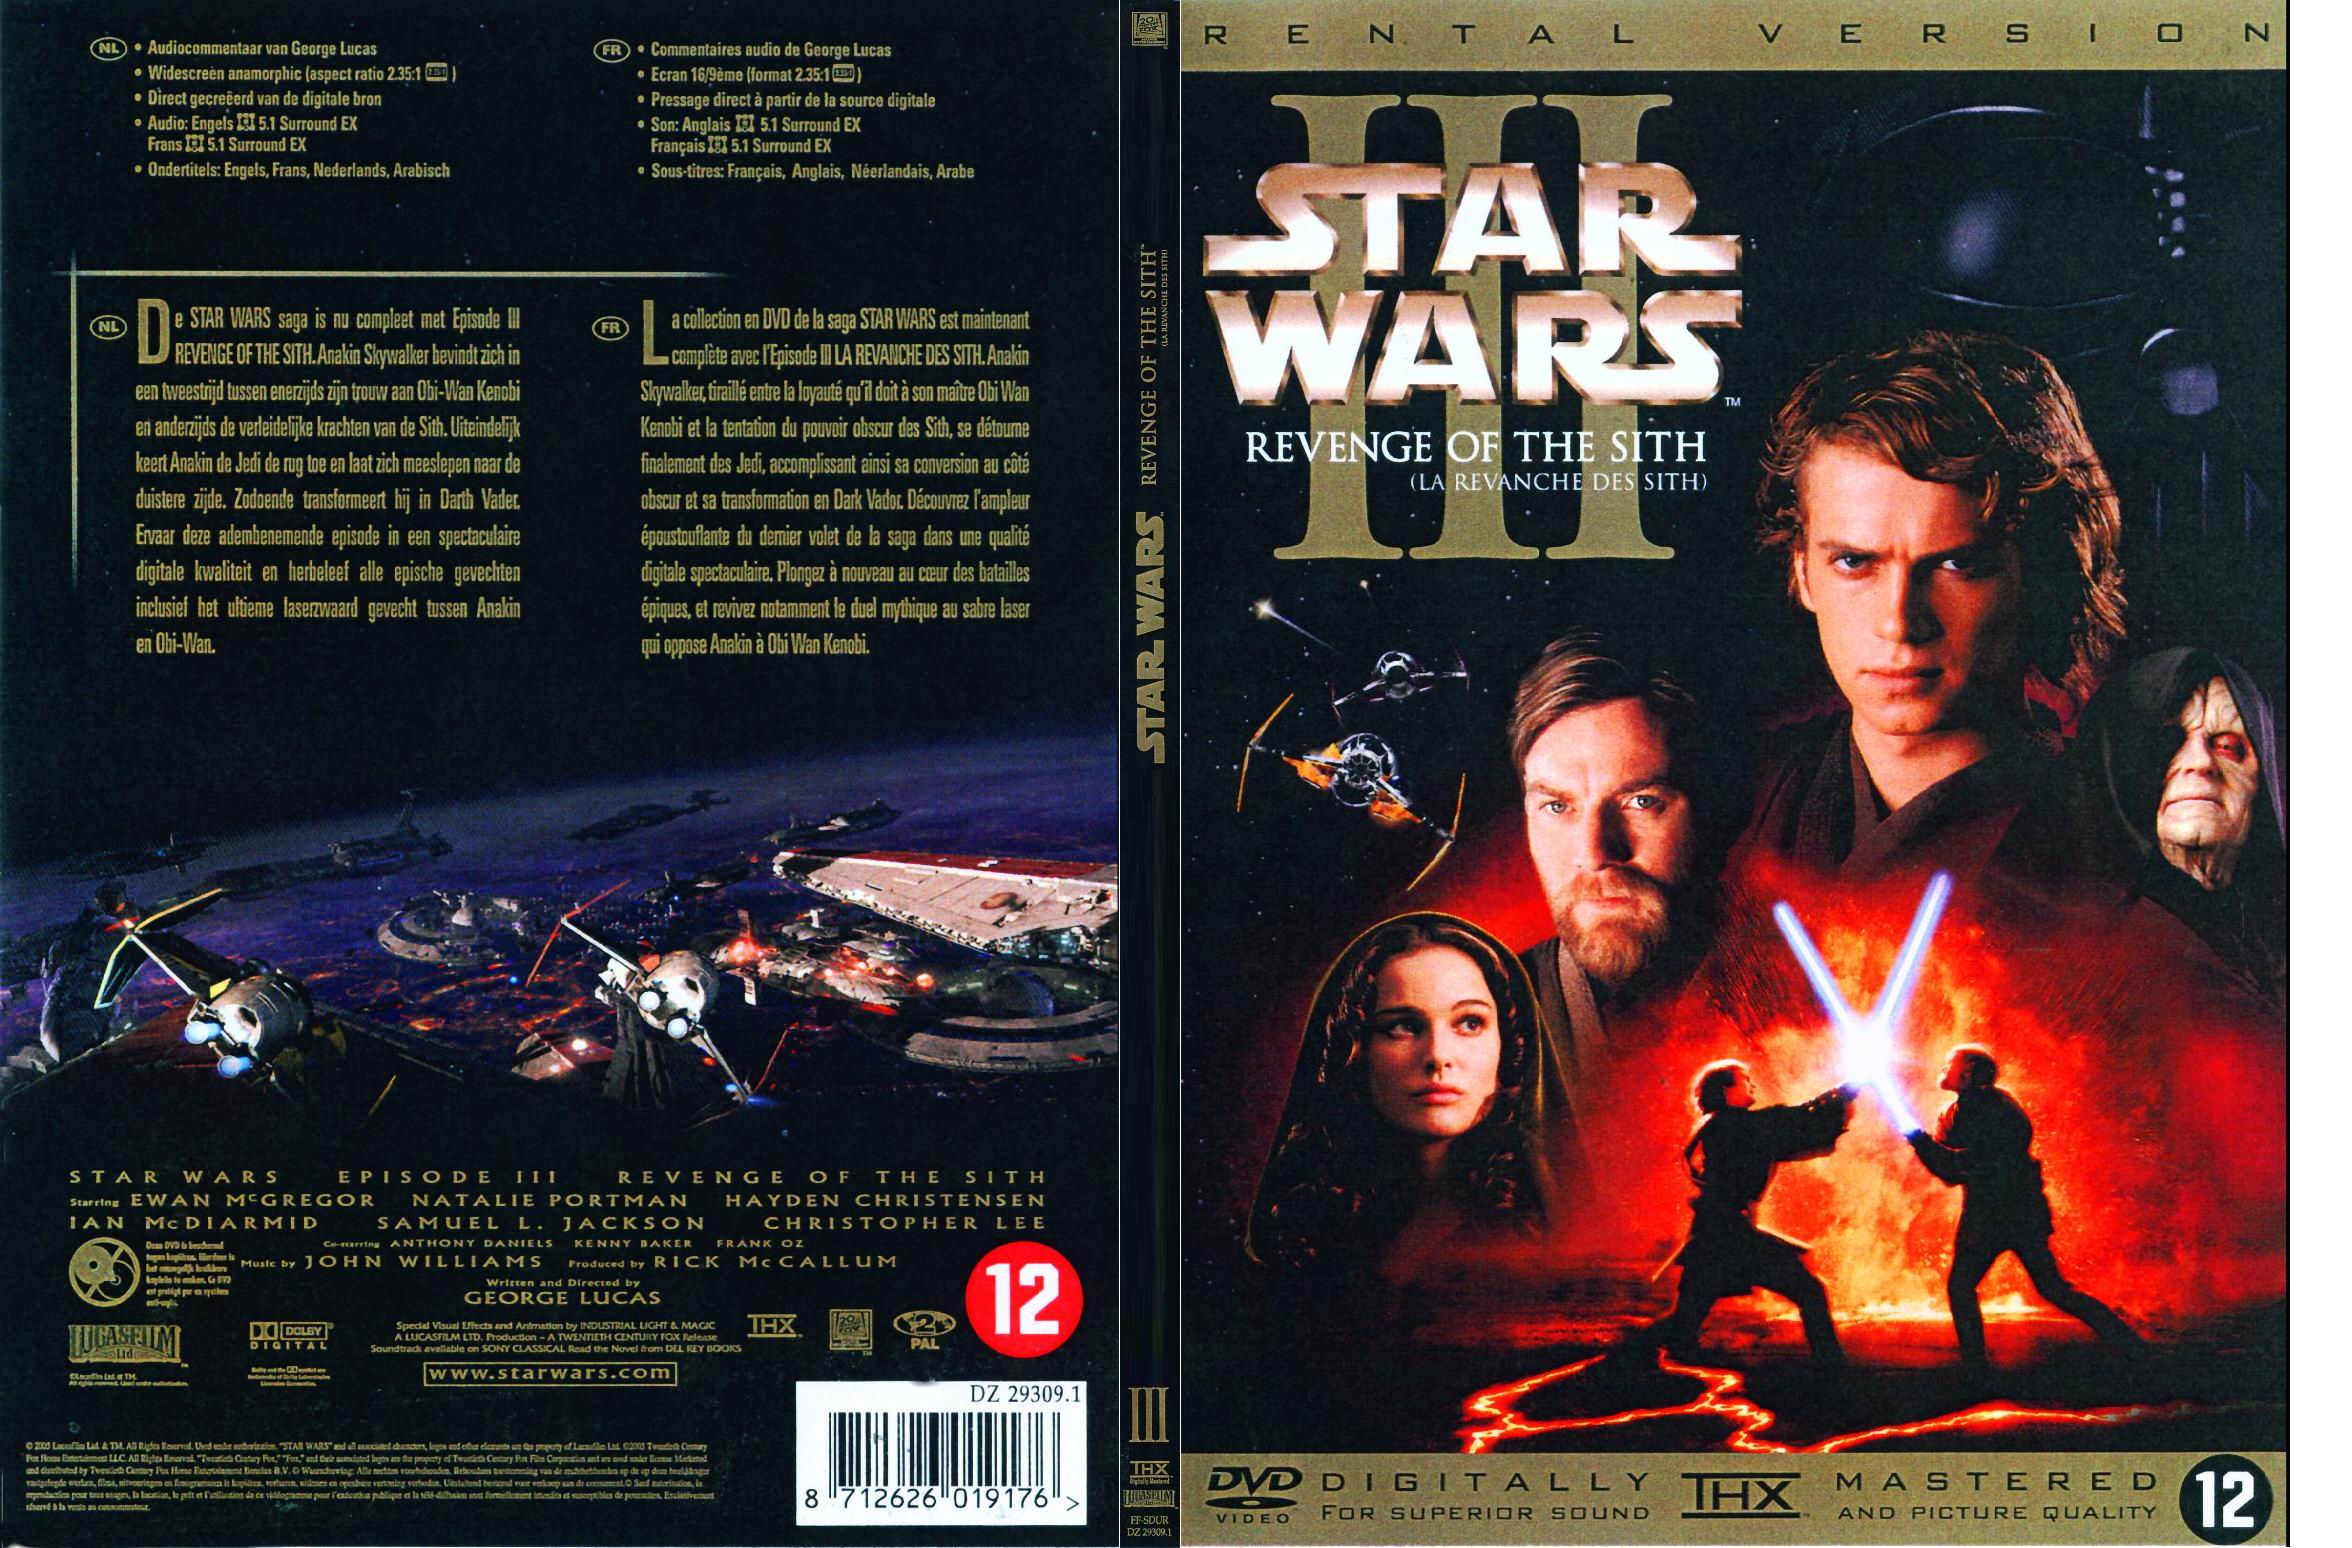 Jaquette DVD Star wars La revanche des Sith - SLIM